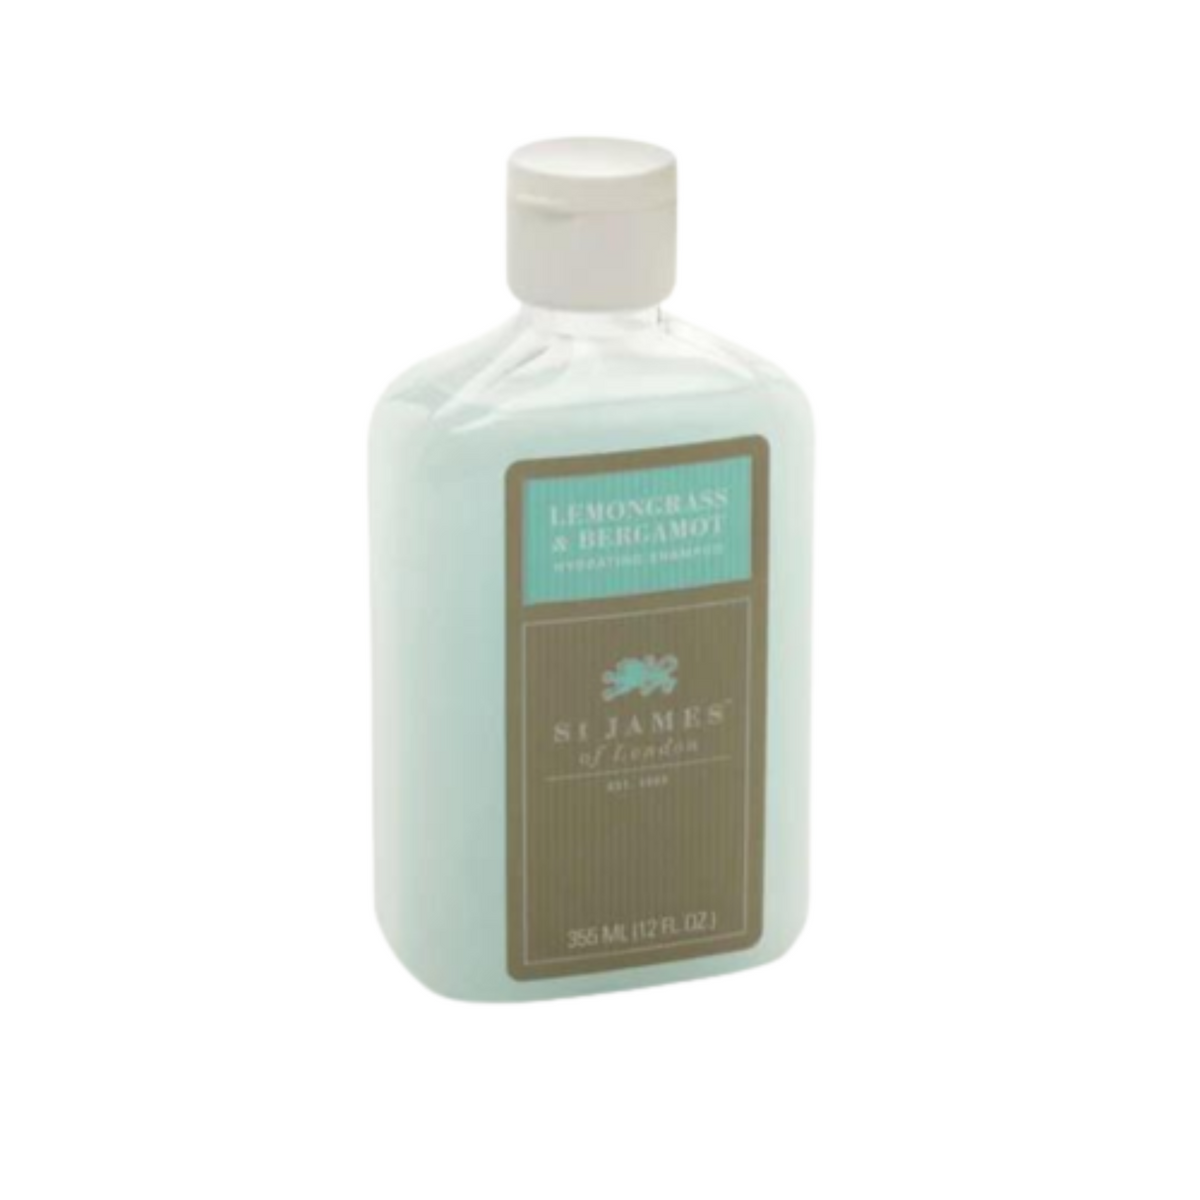 Primary Image of Lemongrass & Bergamot Shampoo